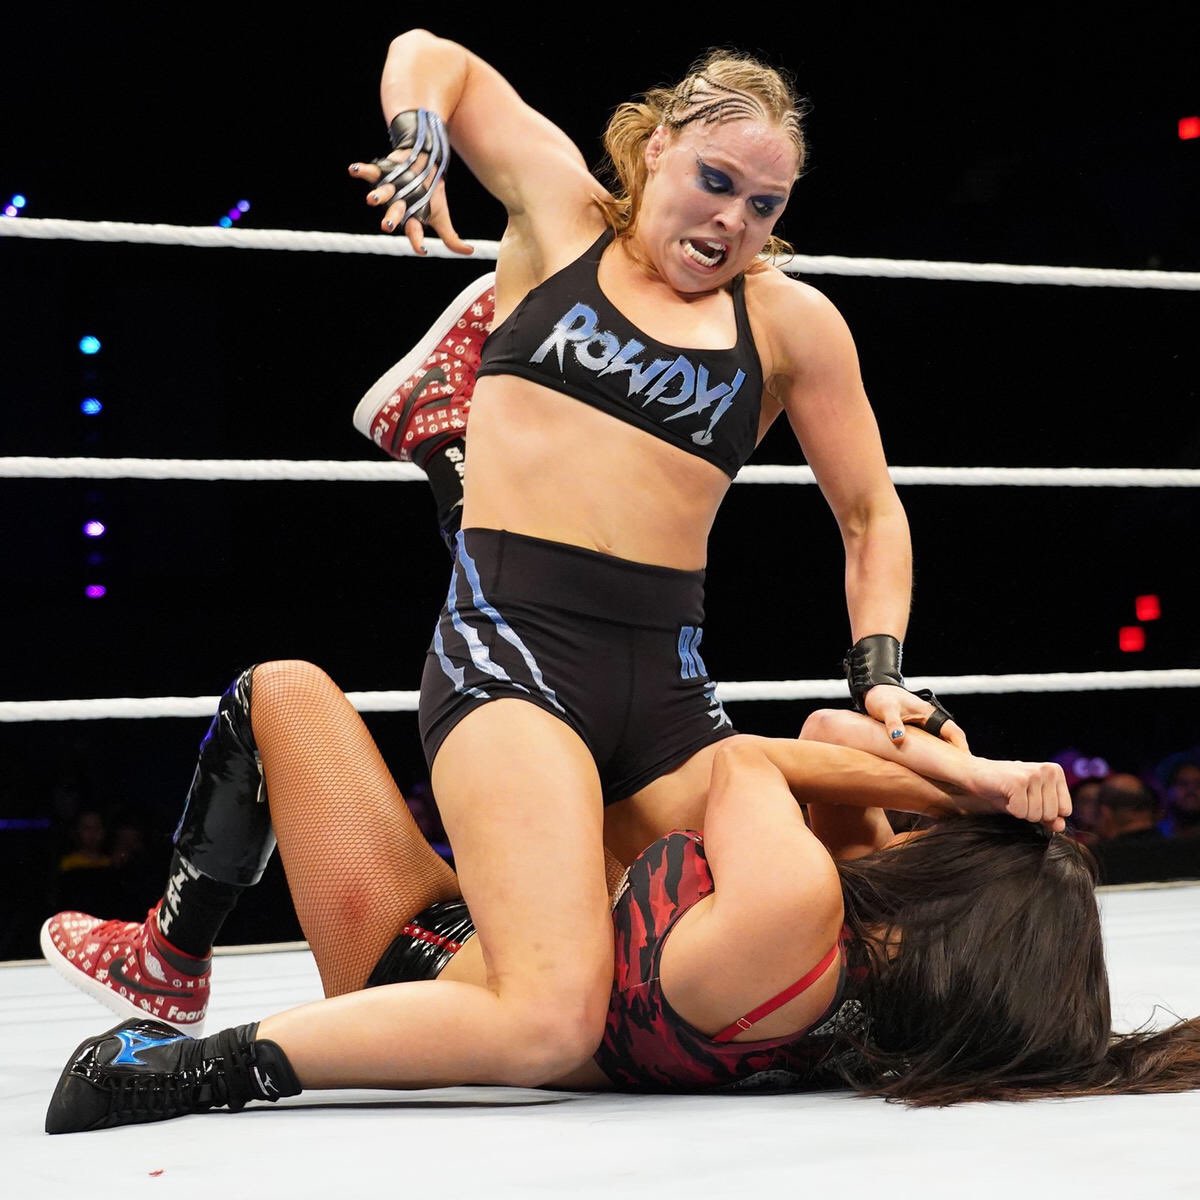 RT @8navyblue: Ronda Rousey vs Nikki Bella - WWE Evolution #WWERaw https://t.co/0wURjhxW6O